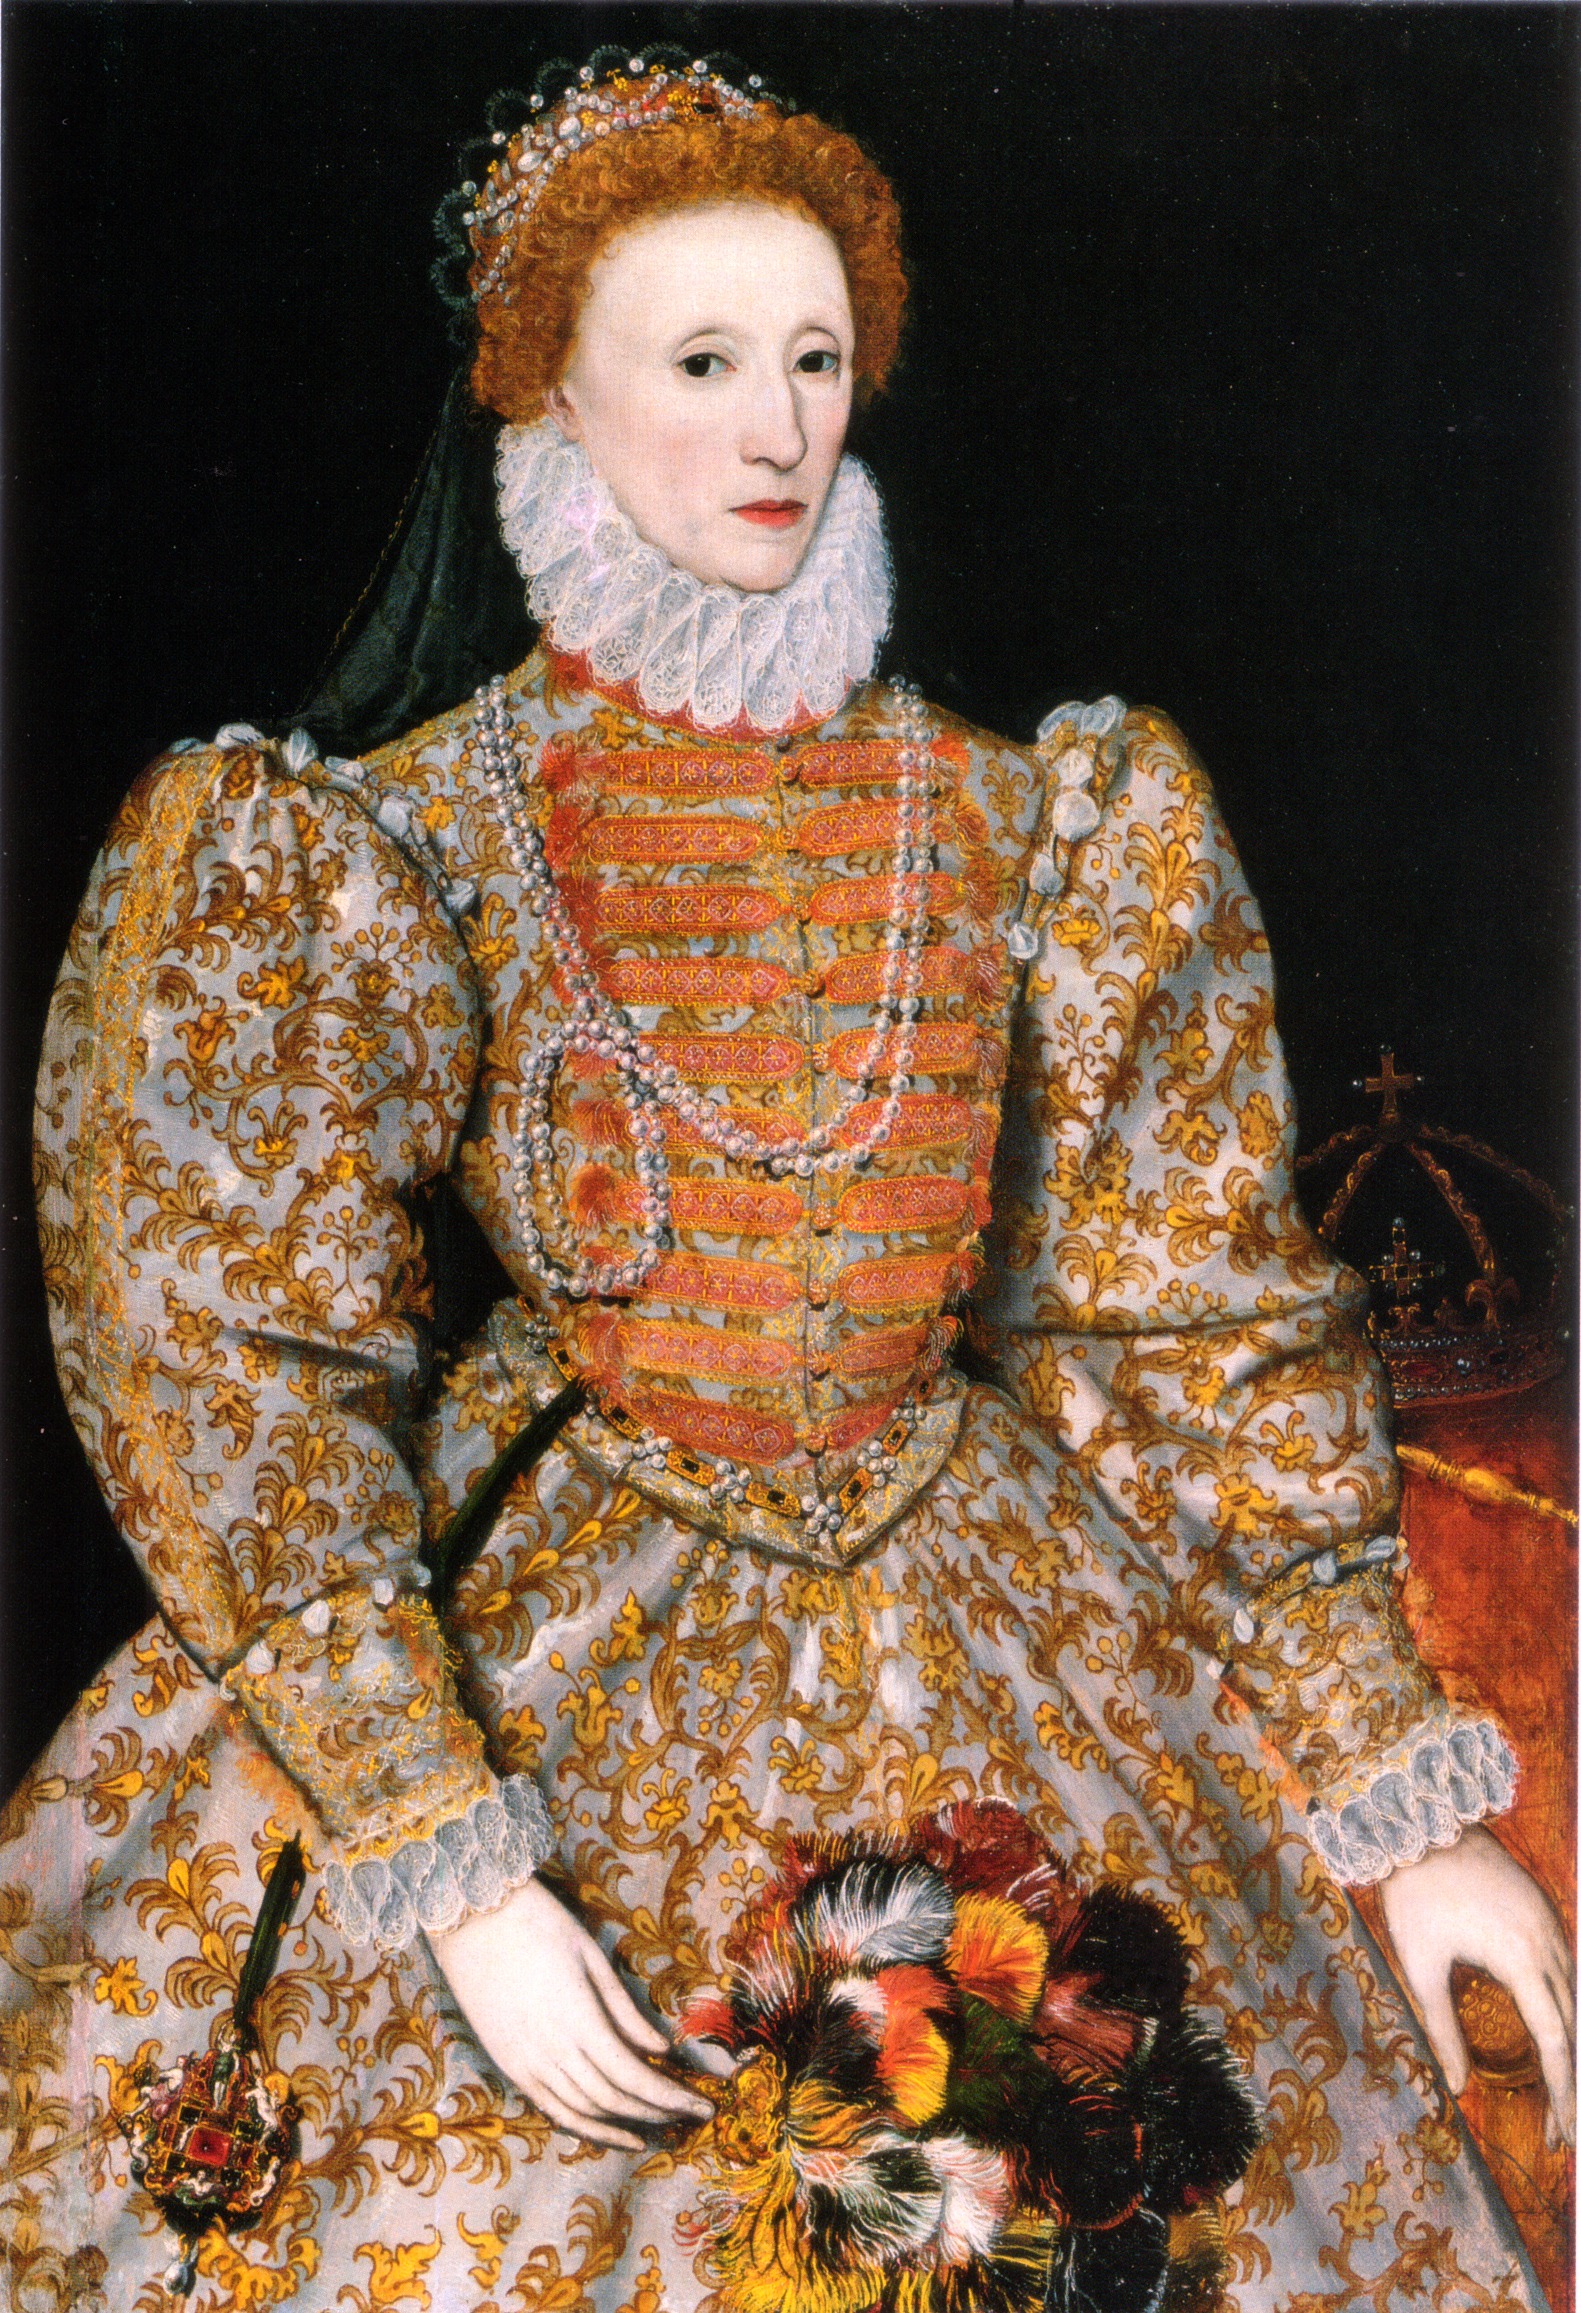 Portrait of Queen Elizabeth I by unknown artist.